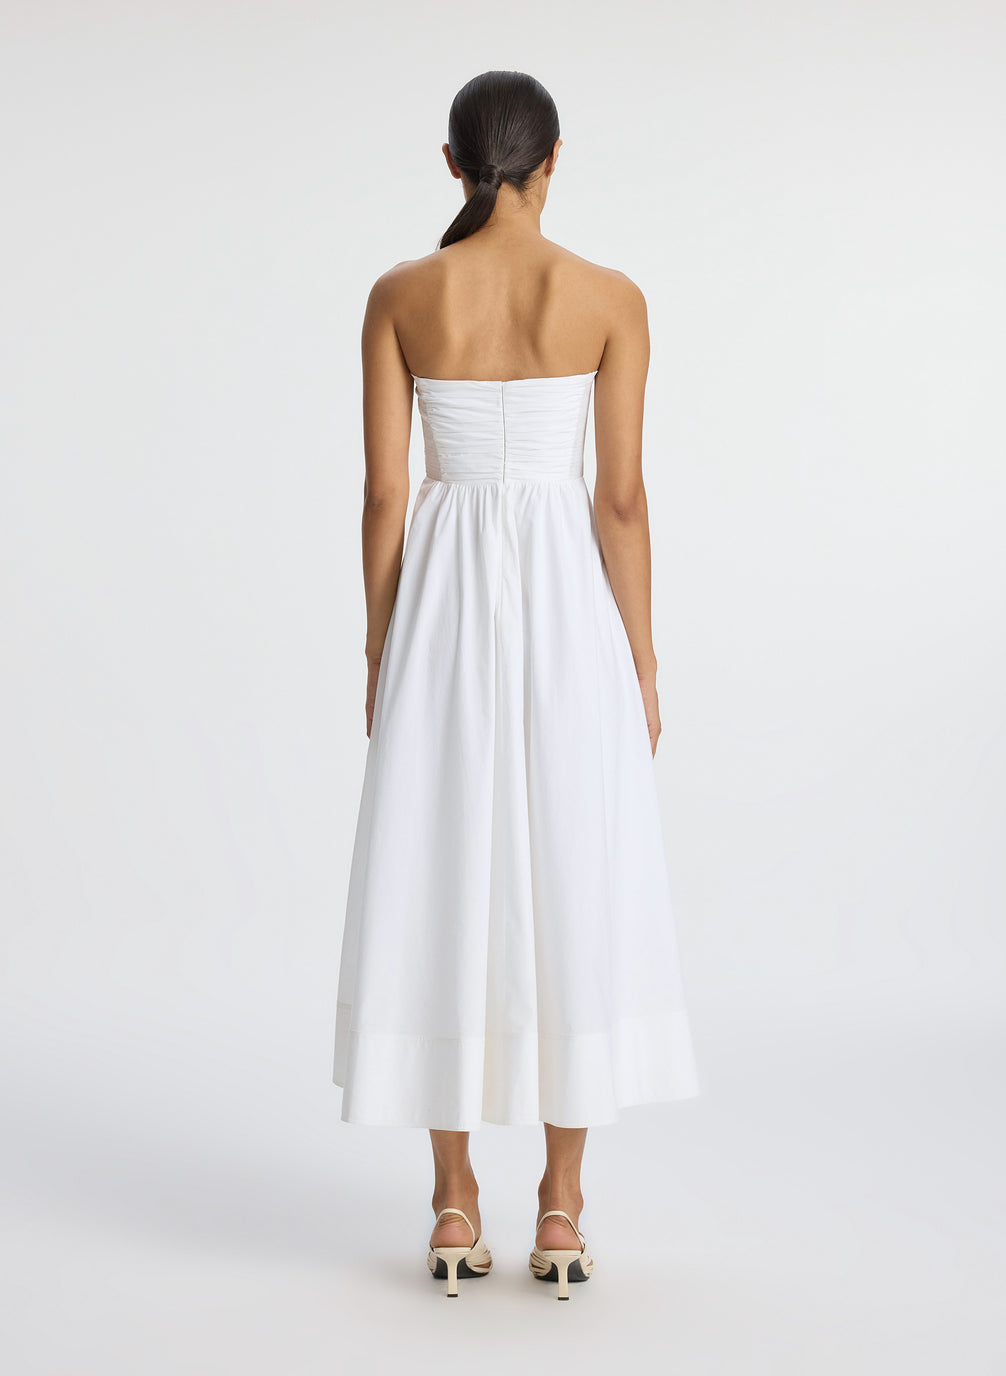 back view of woman wearing white strapless midi dress